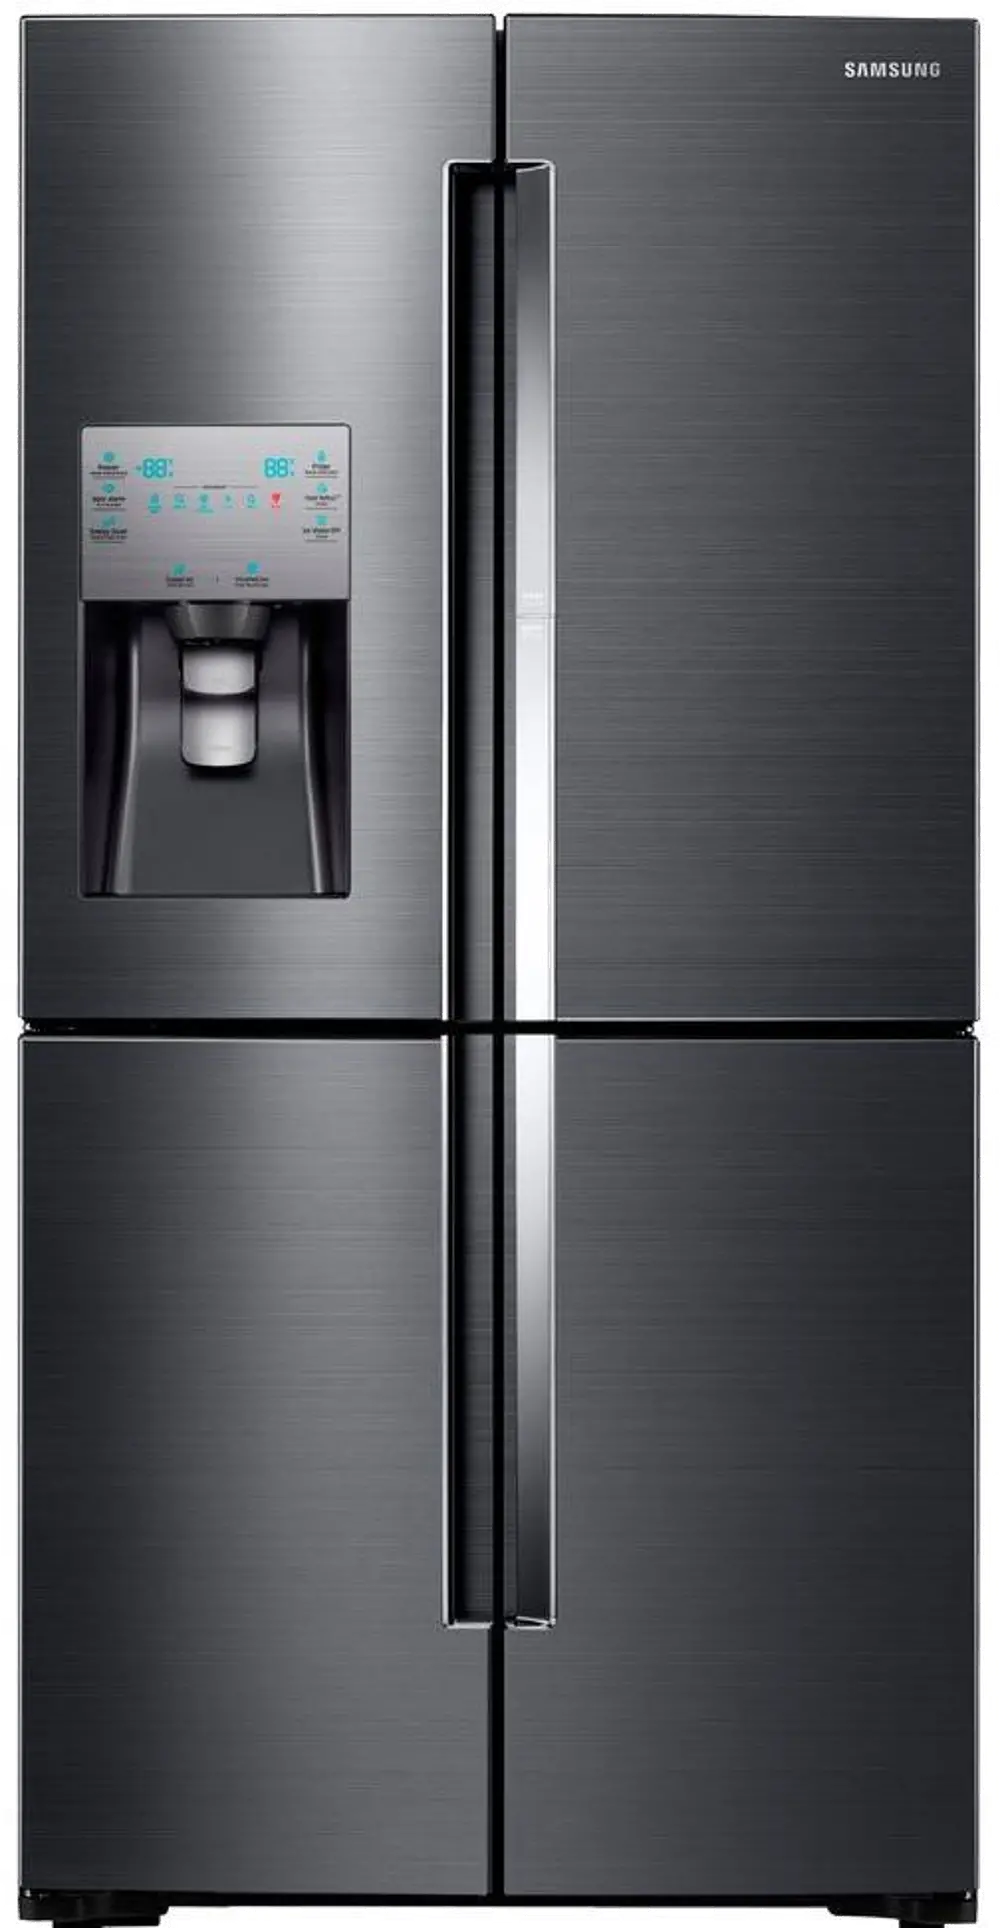 RF22K9381SG Samsung 22.1 cu ft 4 door Refrigerator - Counter Depth Black Stainless Steel-1